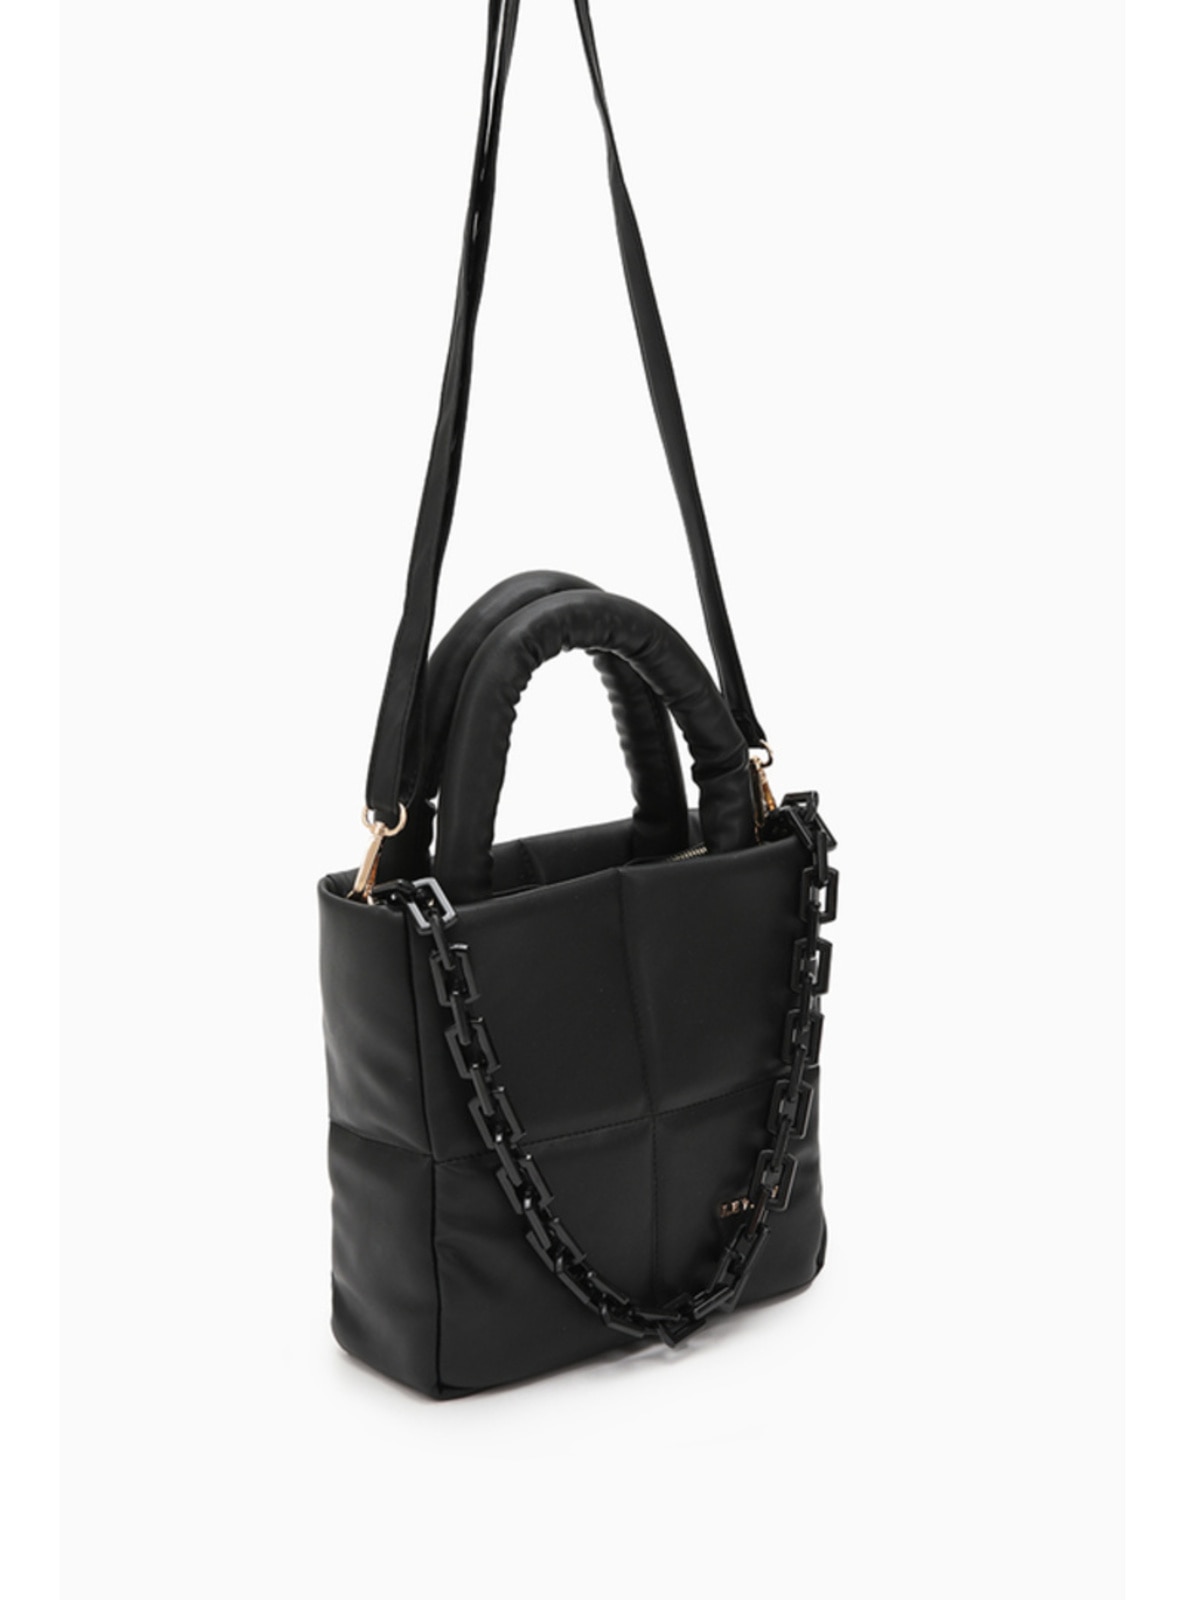 Black - Satchel - Clutch Bags / Handbags